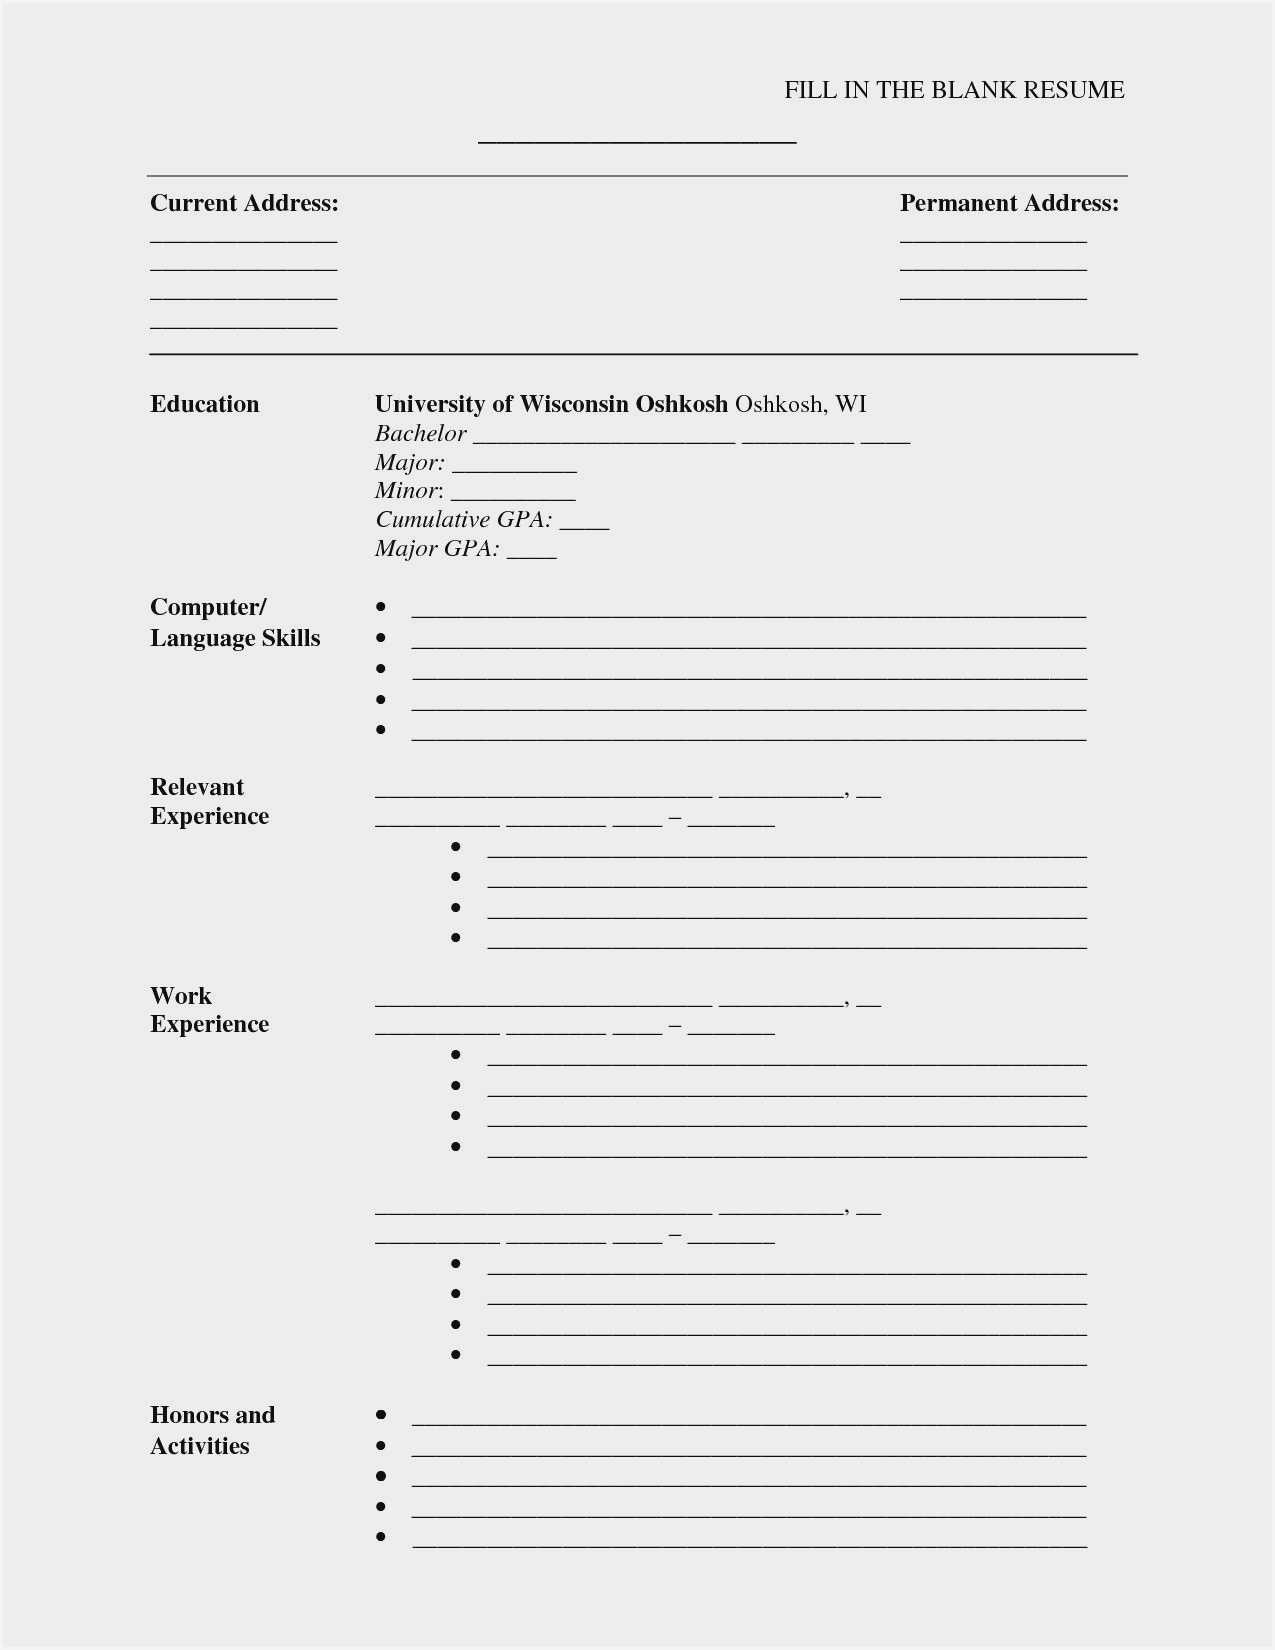 Blank Cv Format Word Download - Resume : Resume Sample #3945 Within Free Blank Cv Template Download